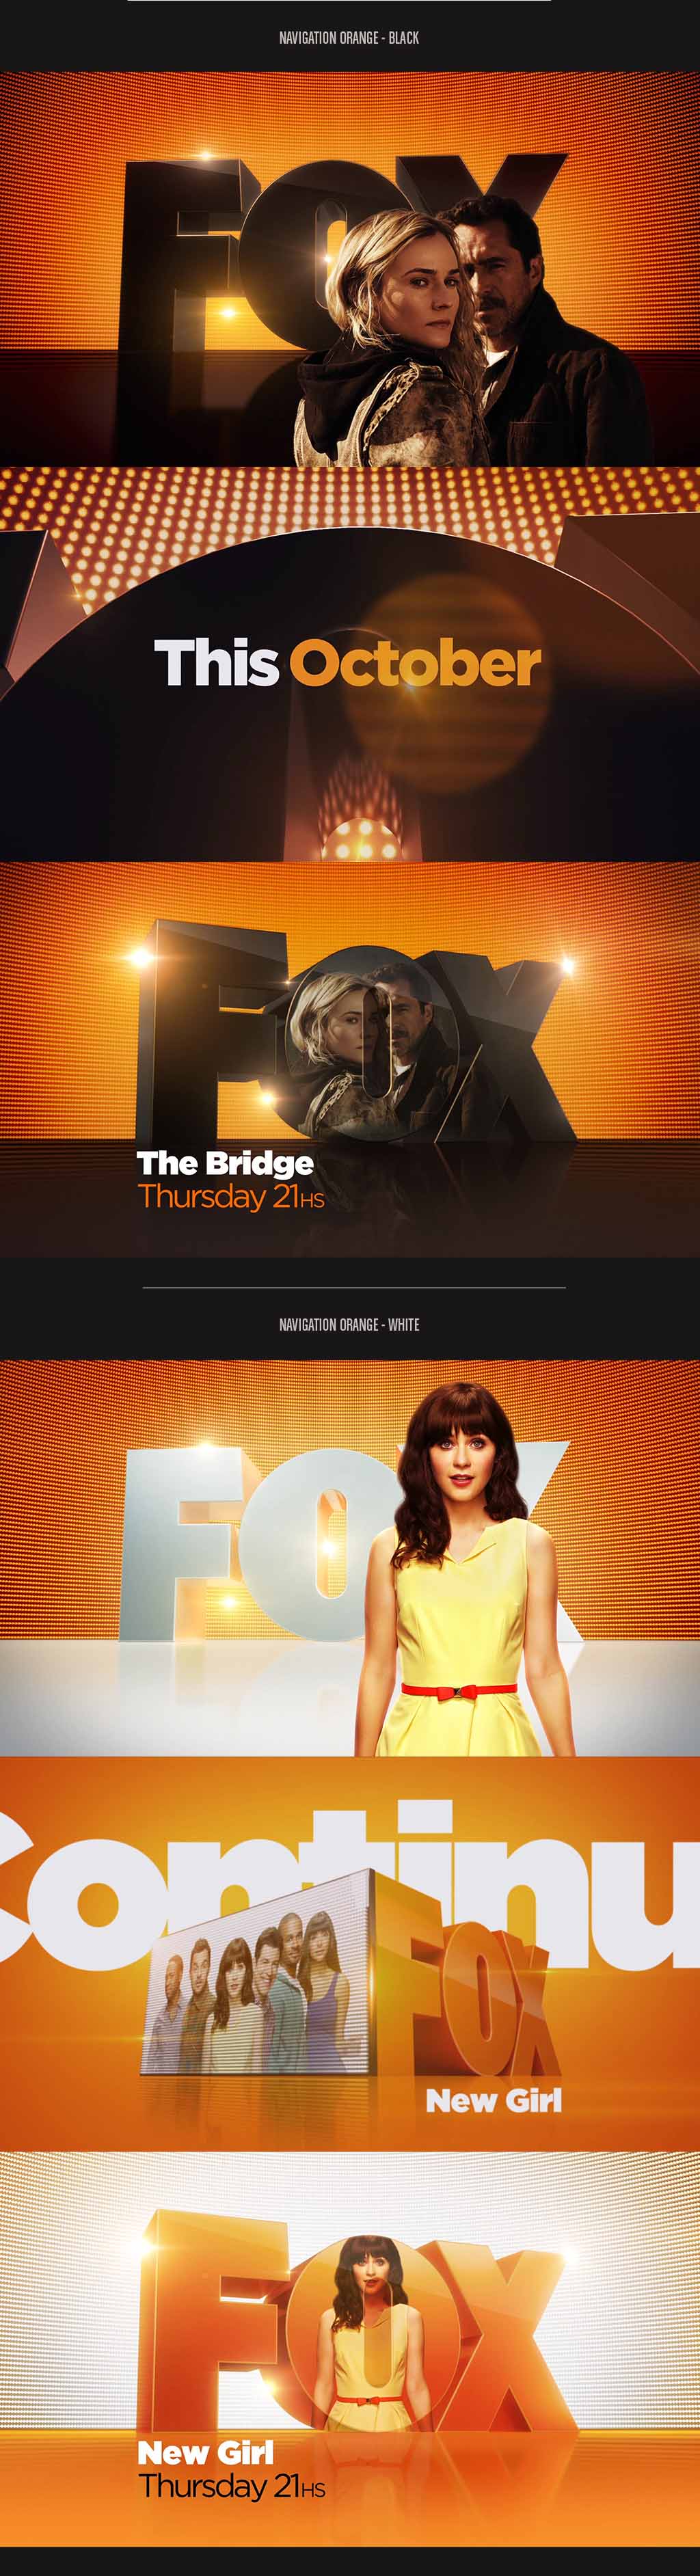 On Air worldwide Branding production for Fox International Channels.